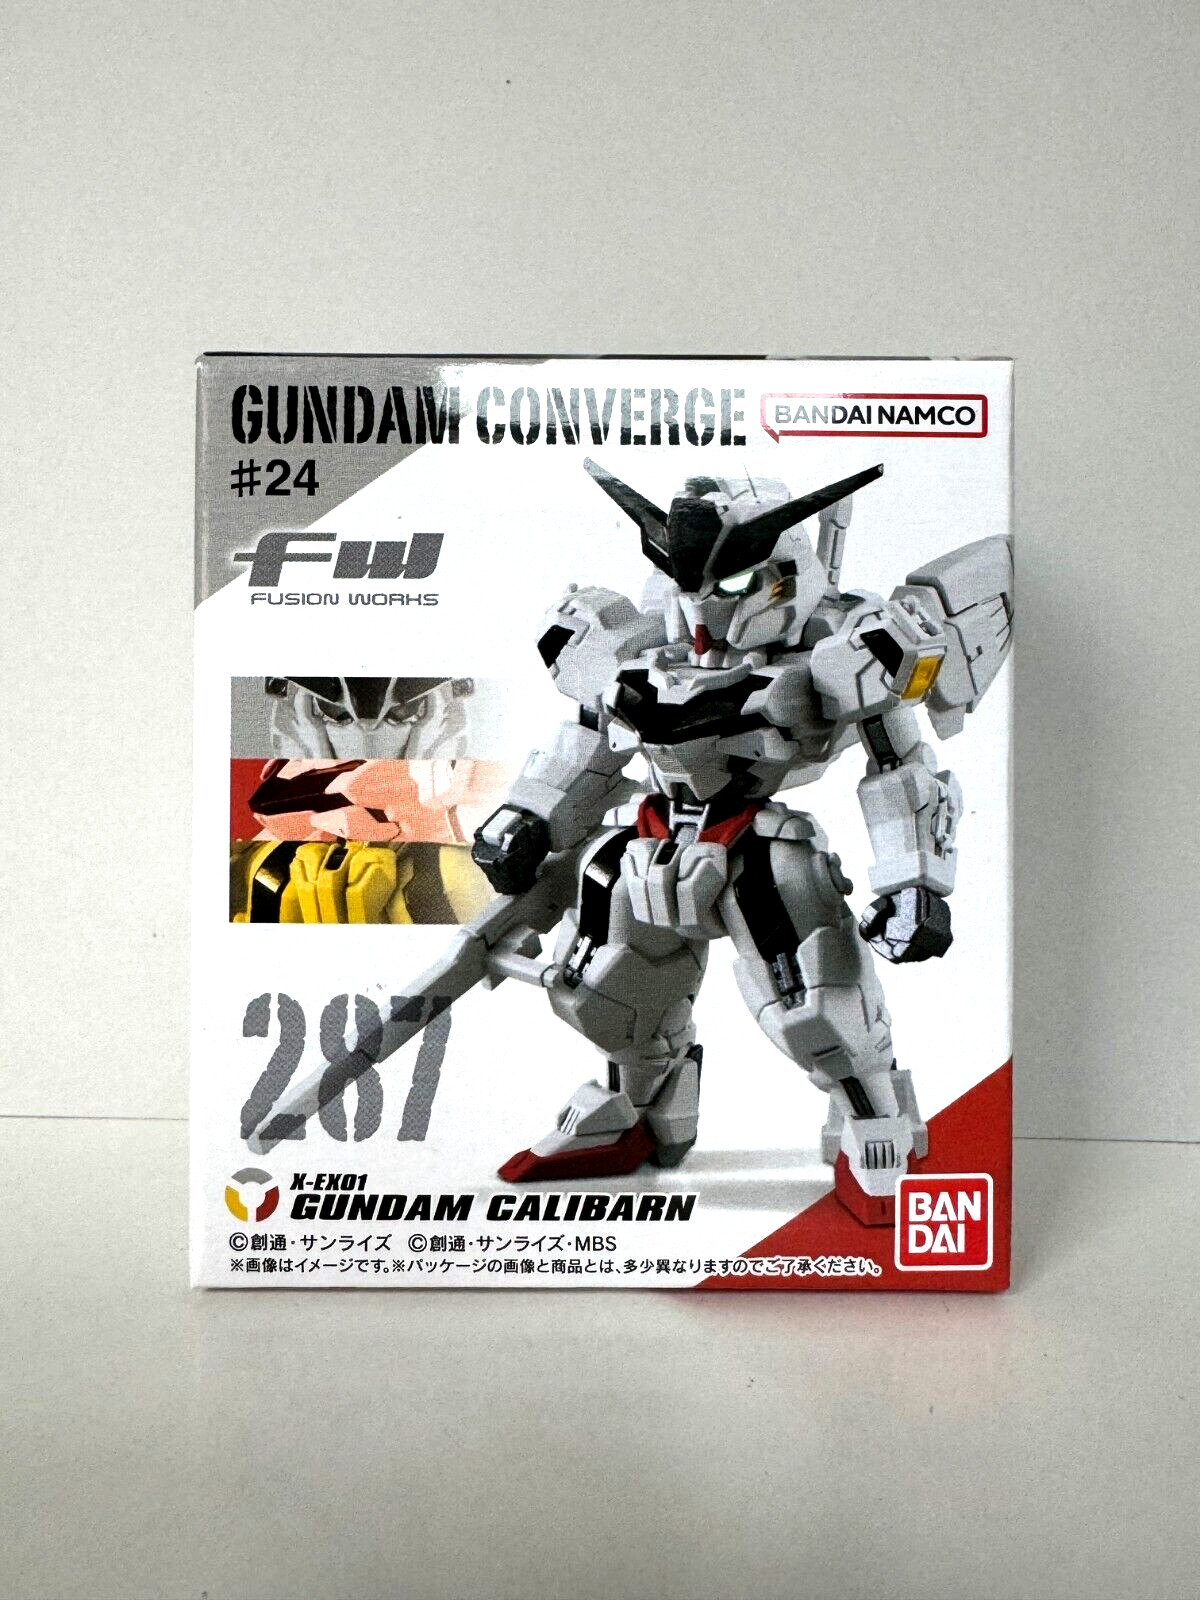 Mobile Suit Gundam FW Gundam Converge #24 Mini-Figure (Gundam Calibarn)